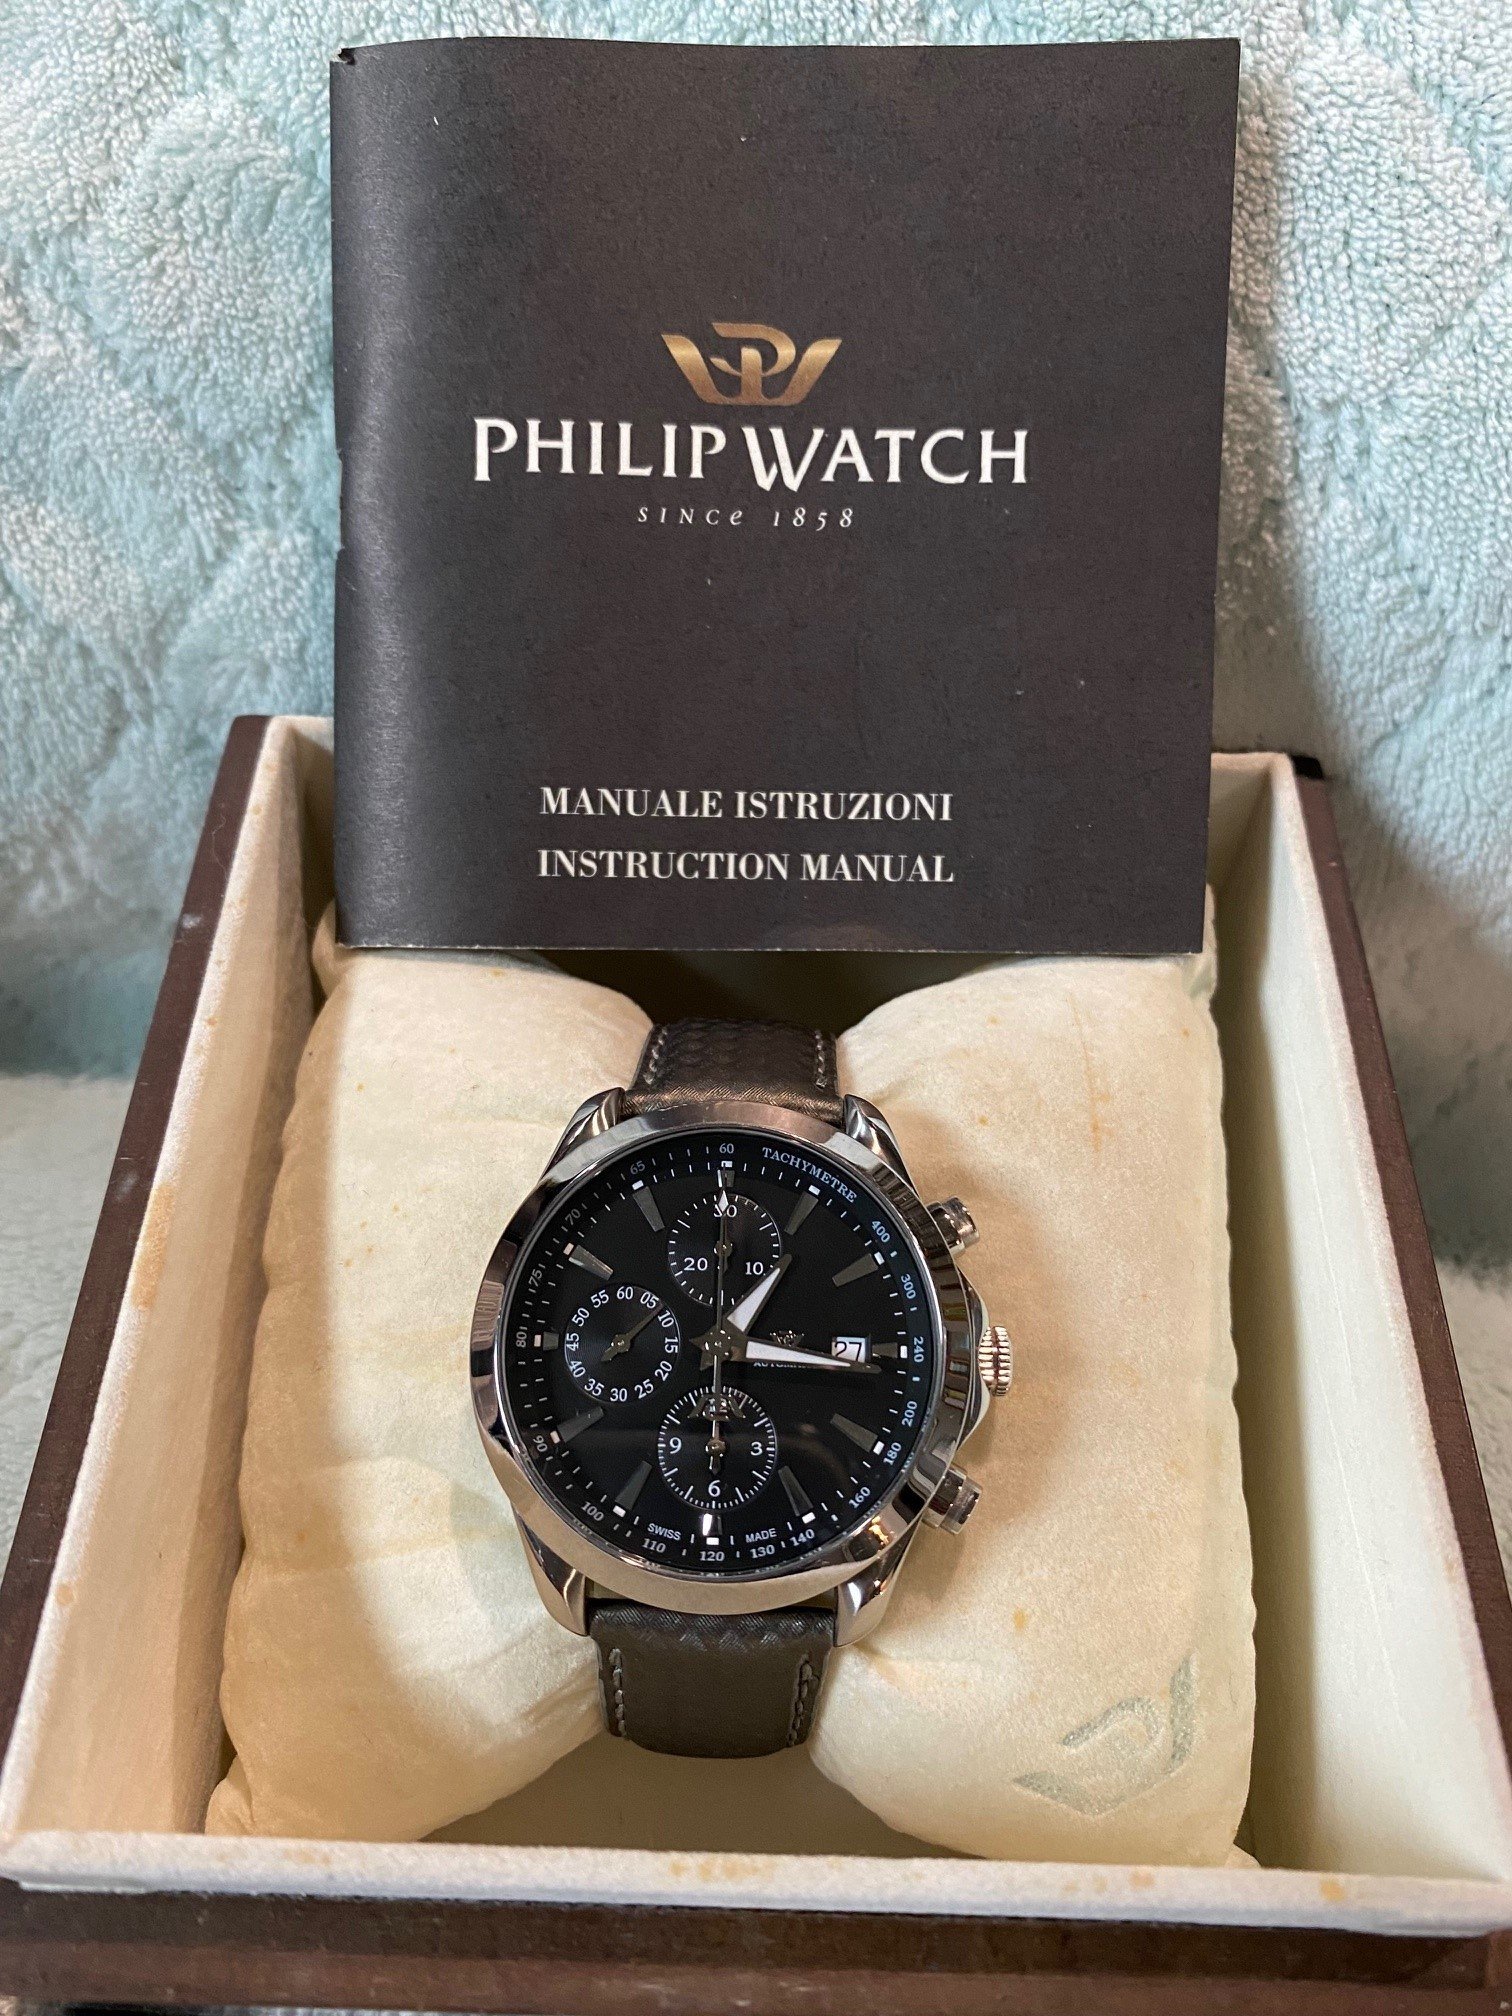 Philip Watch - Blaze Chronograph | WatchCharts